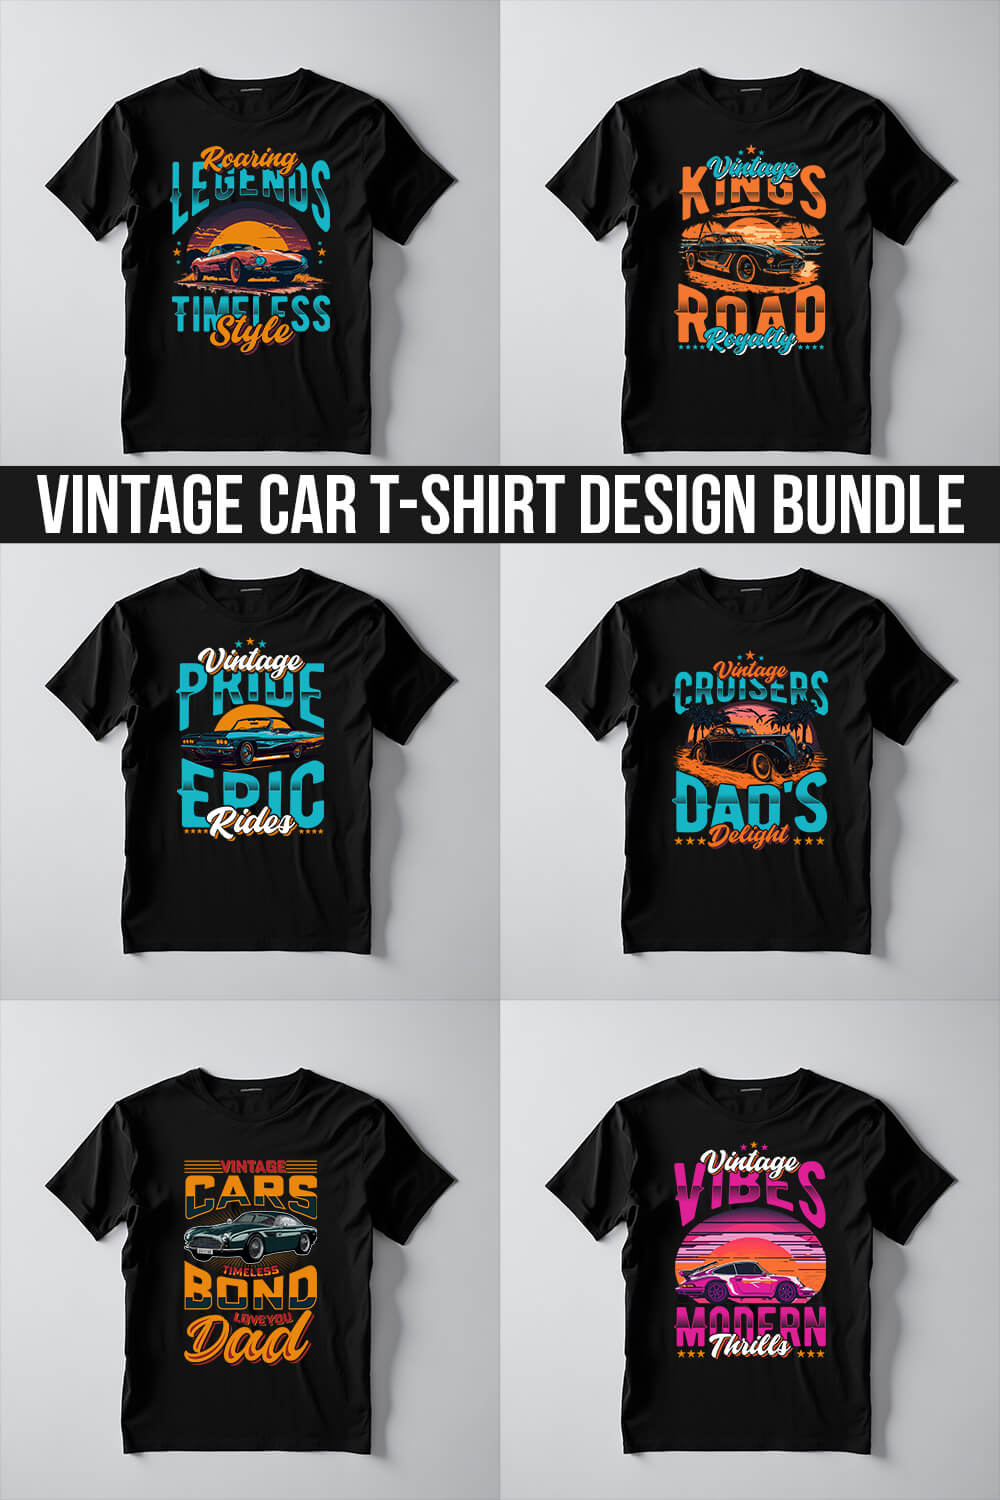 Vintage Legends Of The Road: The Best Classic Car T-shirt Design Vector Bundle pinterest preview image.